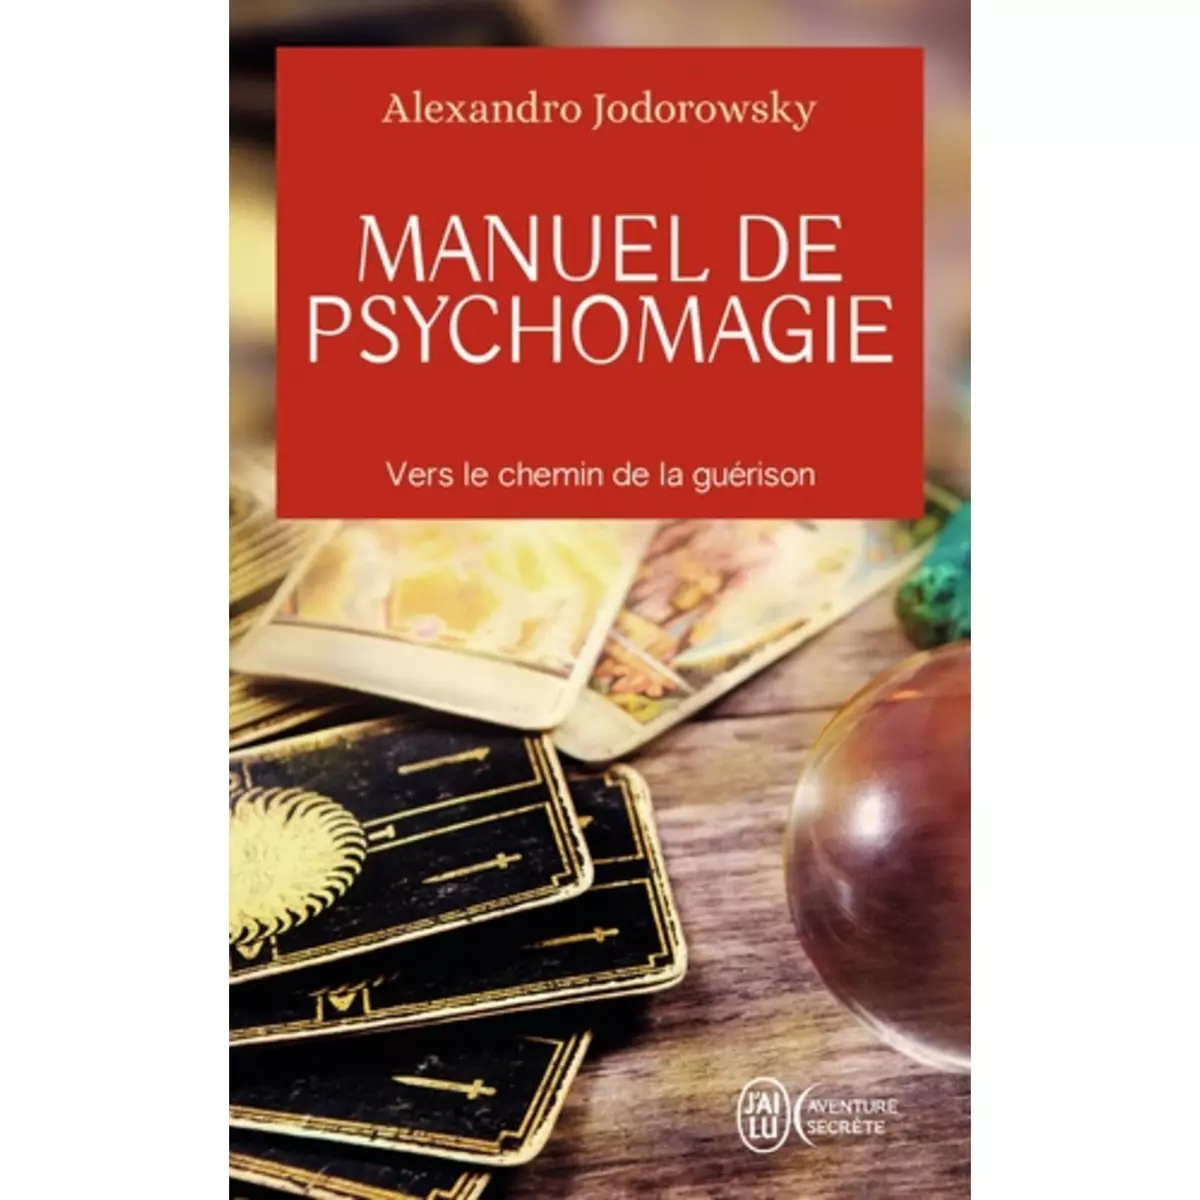  MANUEL DE PSYCHOMAGIE. VERS LE CHEMIN DE LA GUERISON, Jodorowsky Alexandro